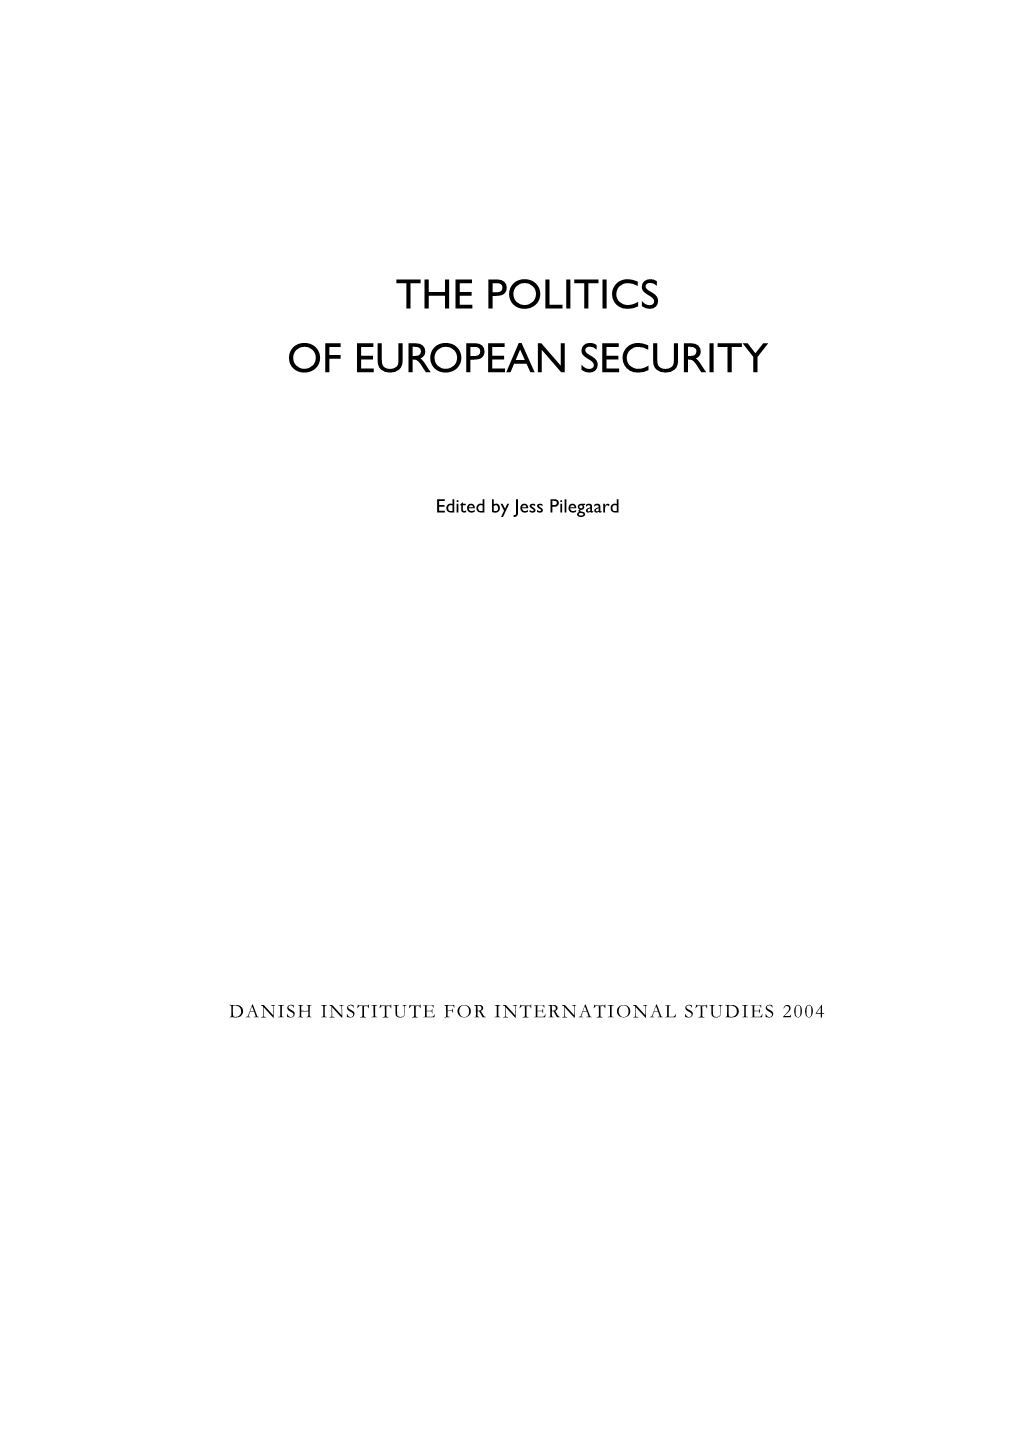 The Politics of European Security